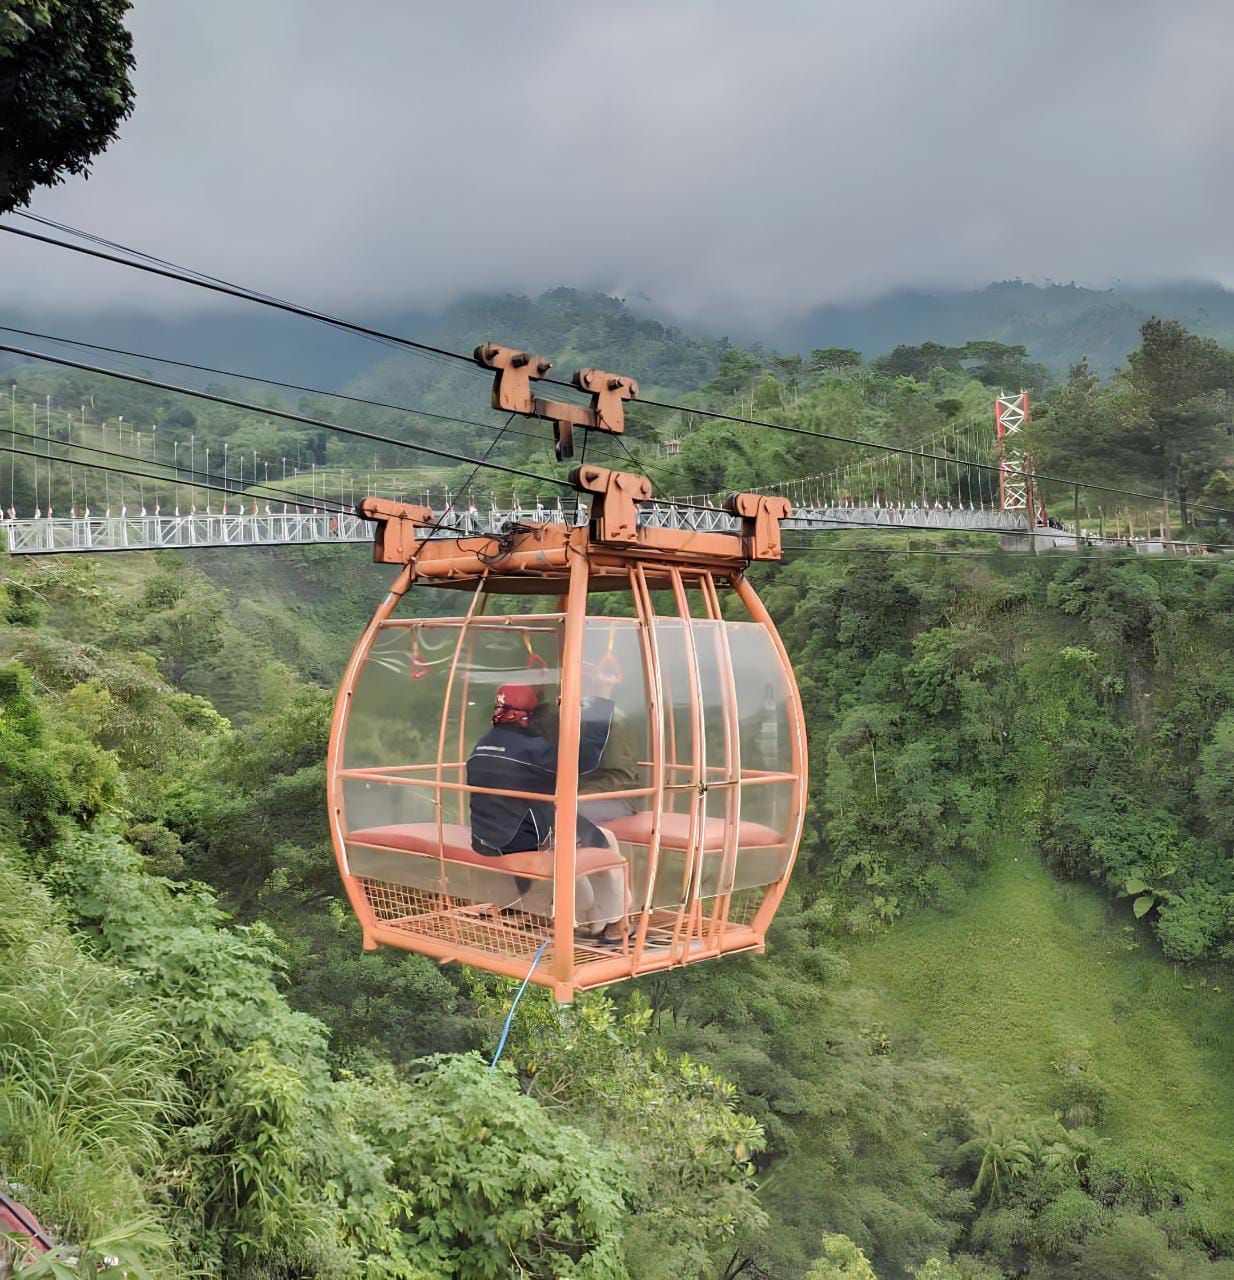 Wisata Gondola Girpasang di Klaten / @wisata.klaten / Instagram